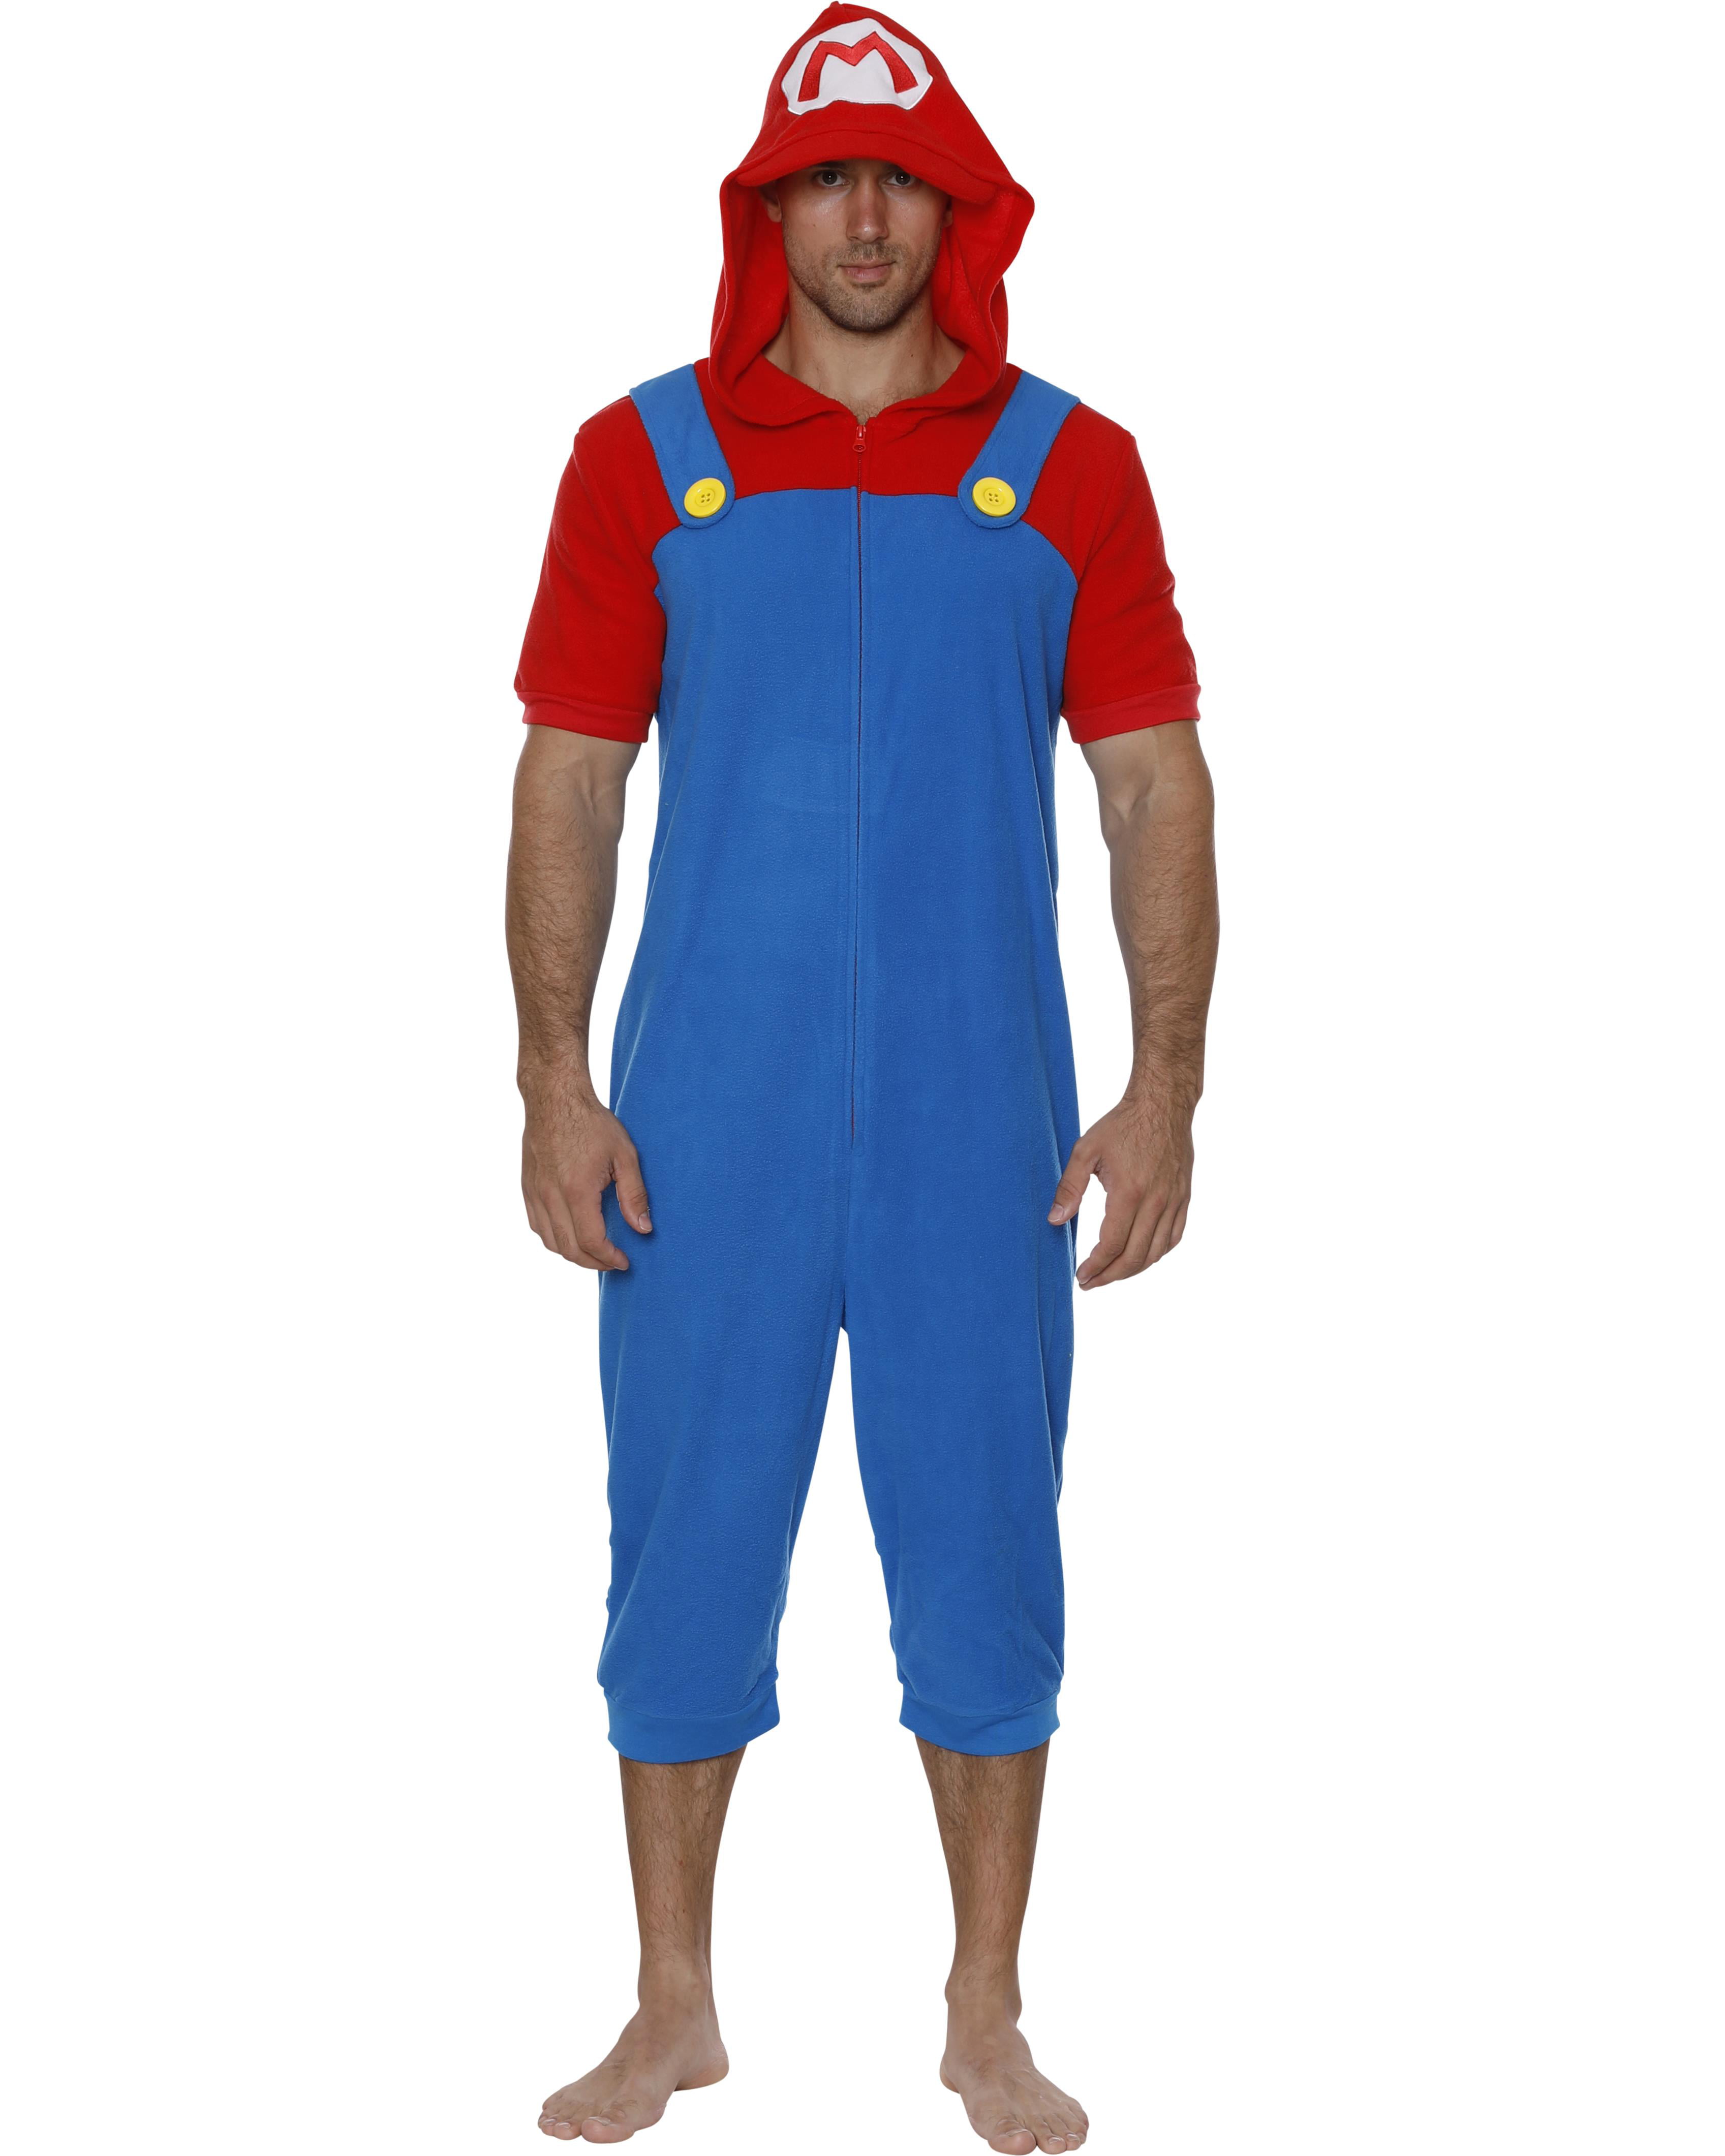 Yoshi Fleece Costumes Cosplay Costume Gender Free Size Super Mario Bros 